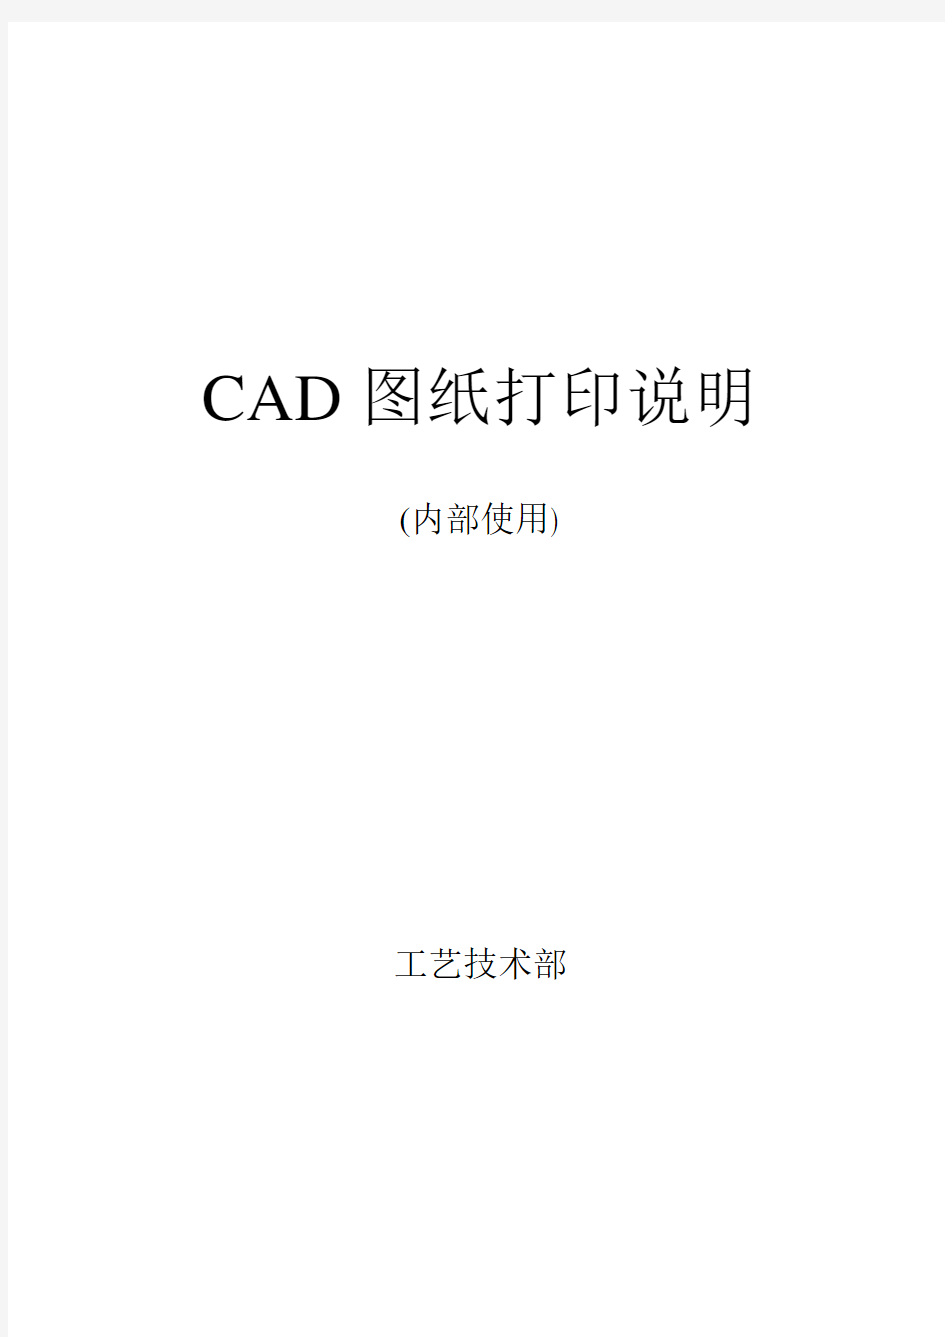 CAD图纸拼图打印(内部使用)